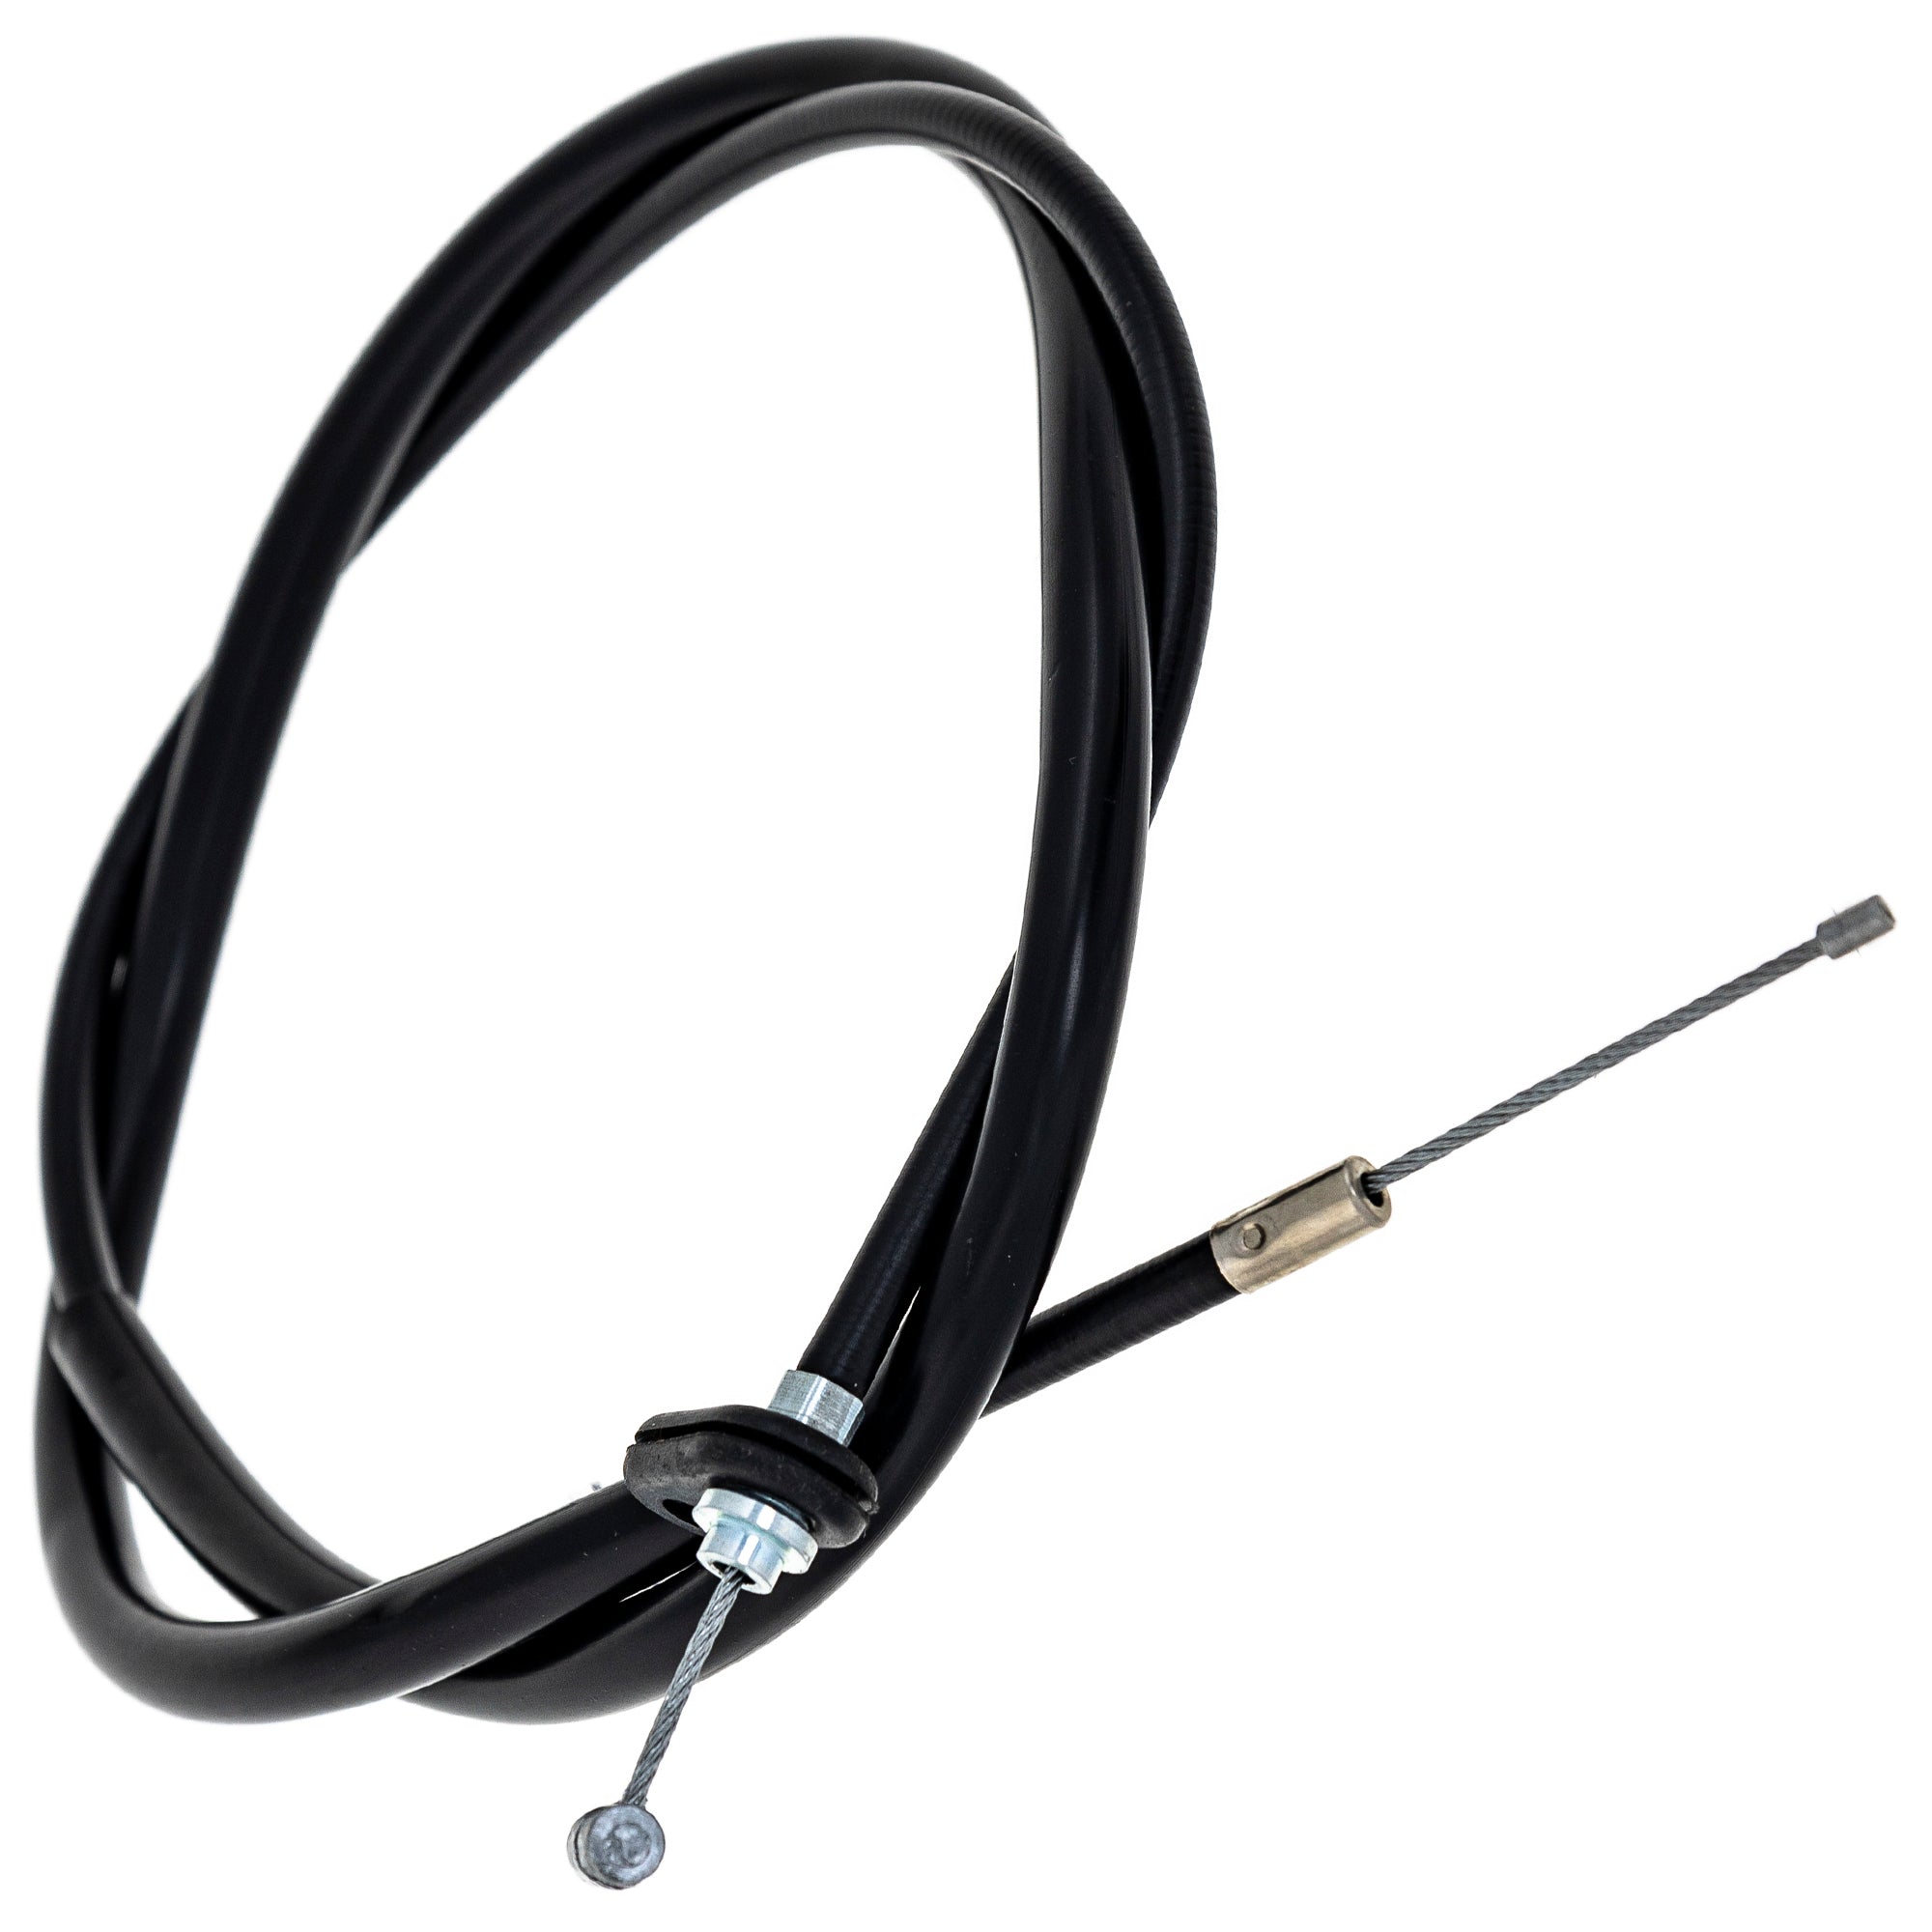 Carburetor & Throttle Cable Kit For Honda MK1008164